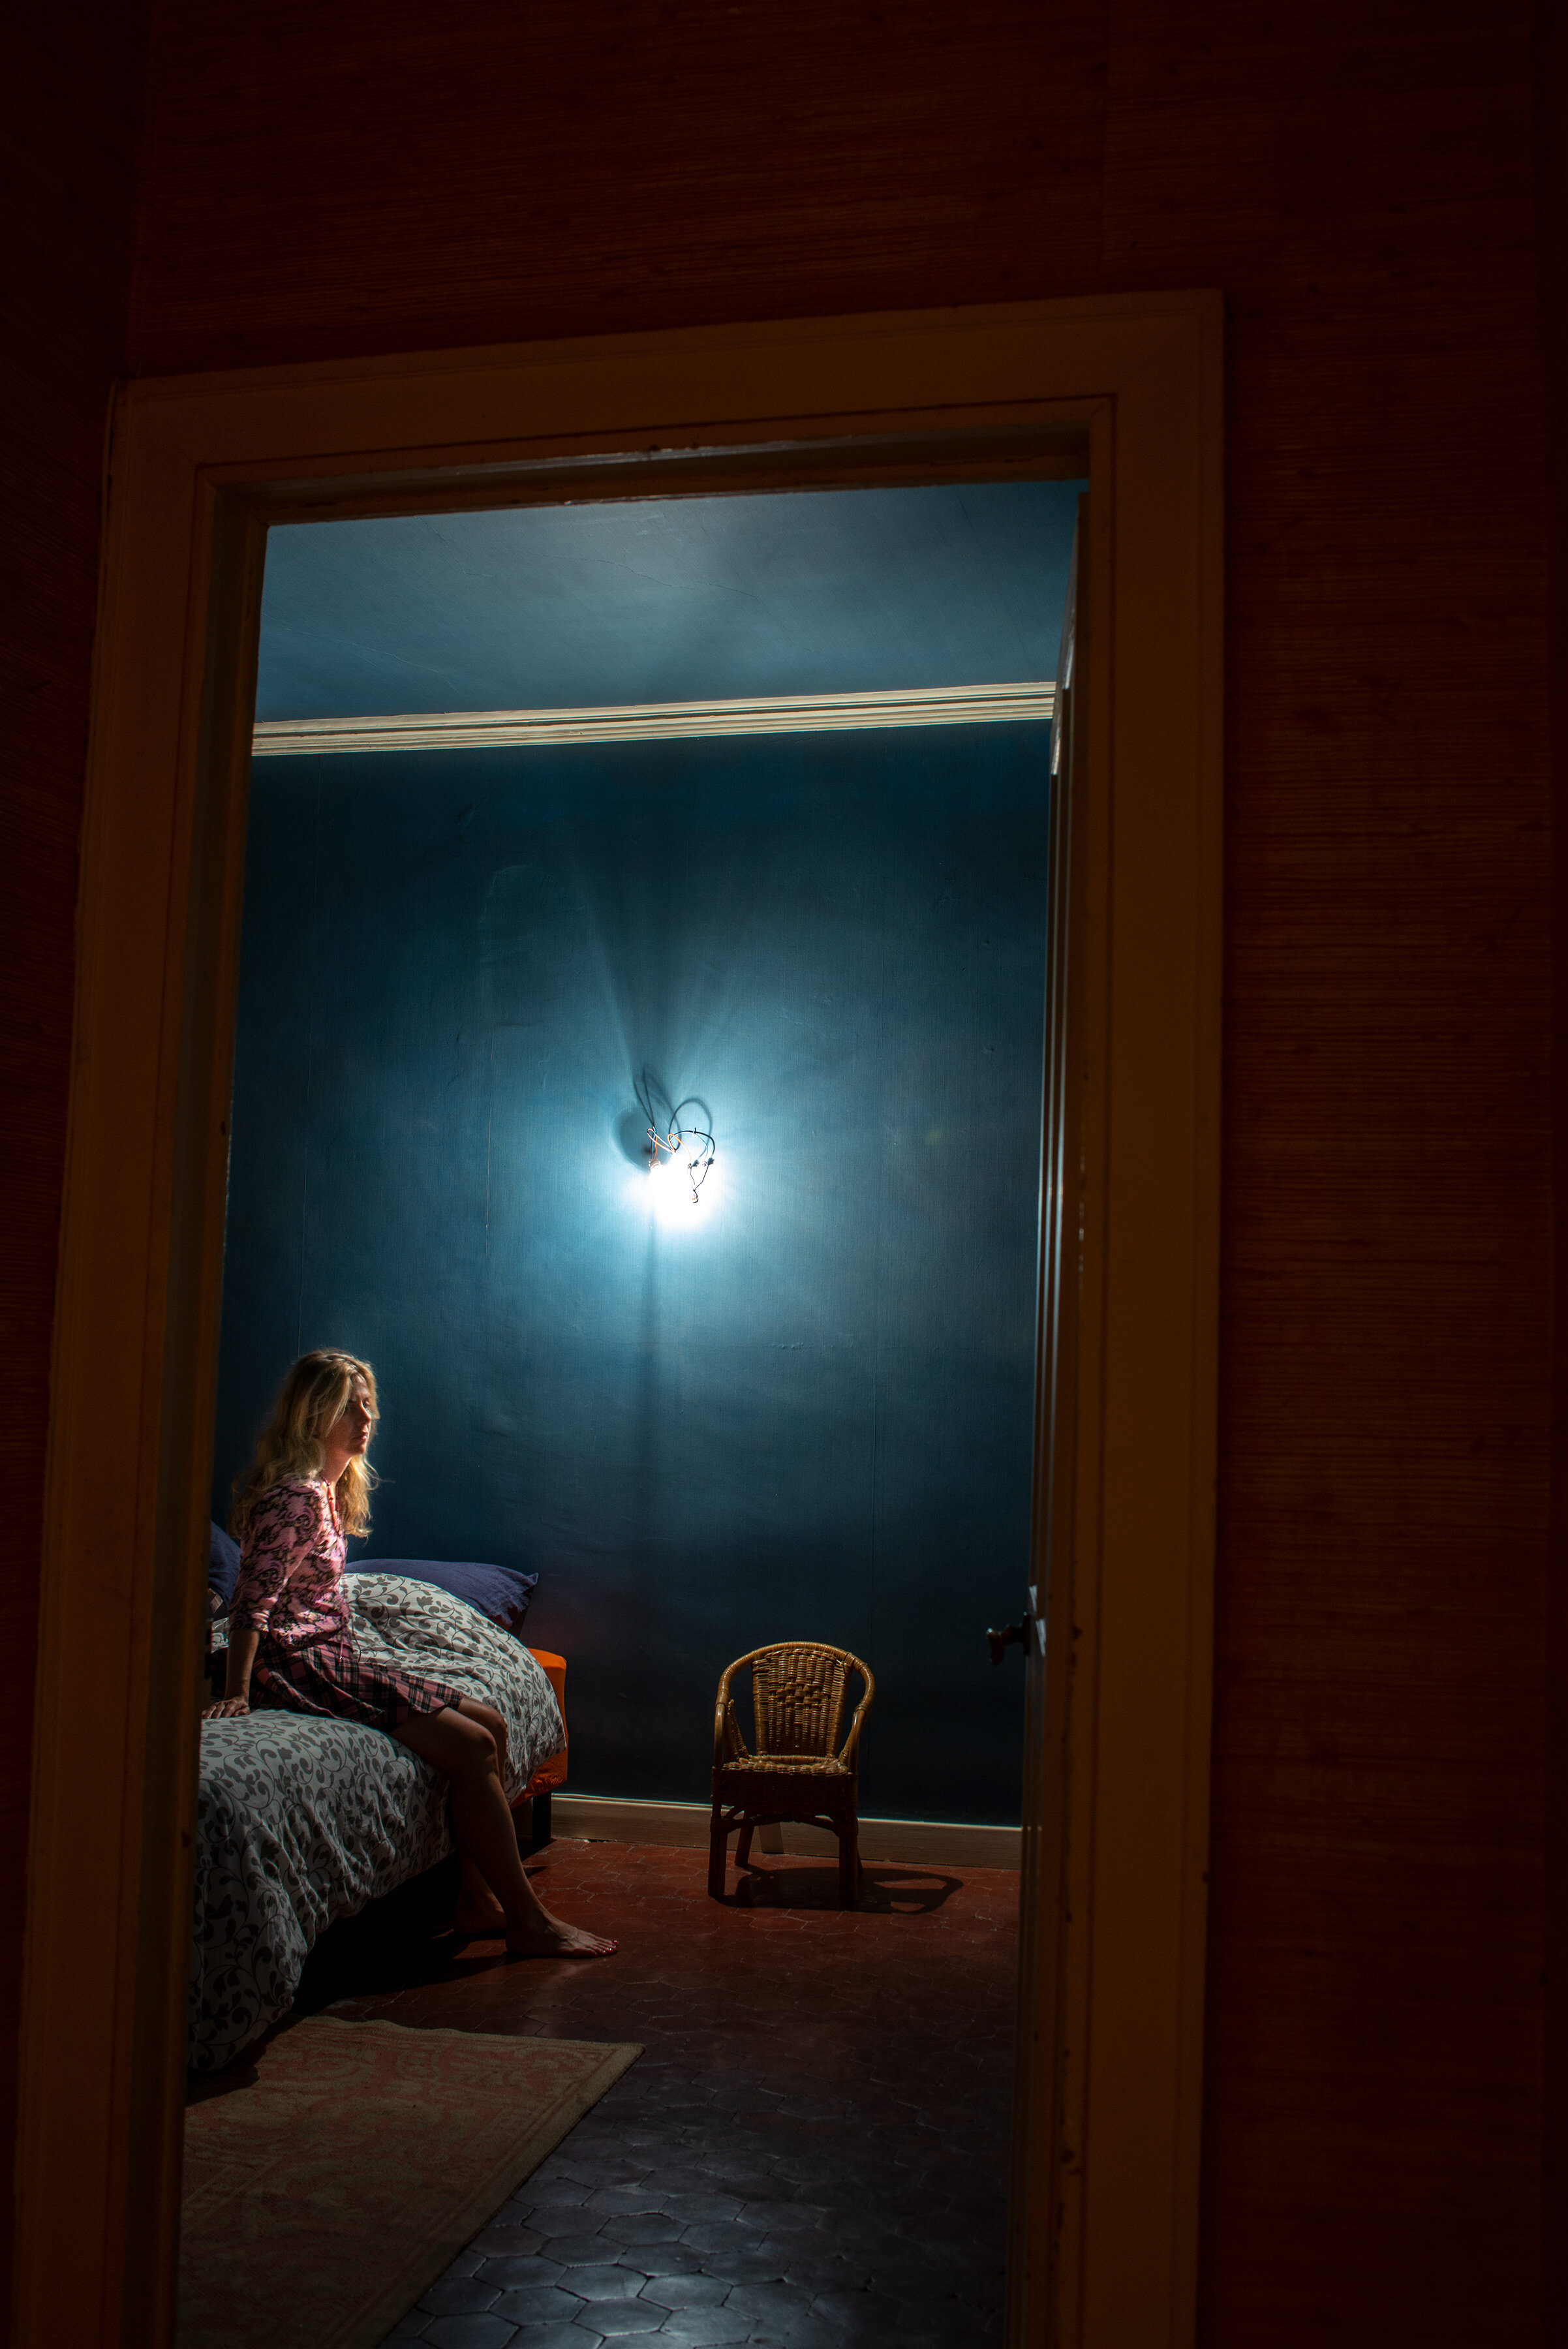  VERA MILJKOVIC  Blue Room,  2020. 18x26”. Archival pigment print. $900.00.   Artist Talk here.  